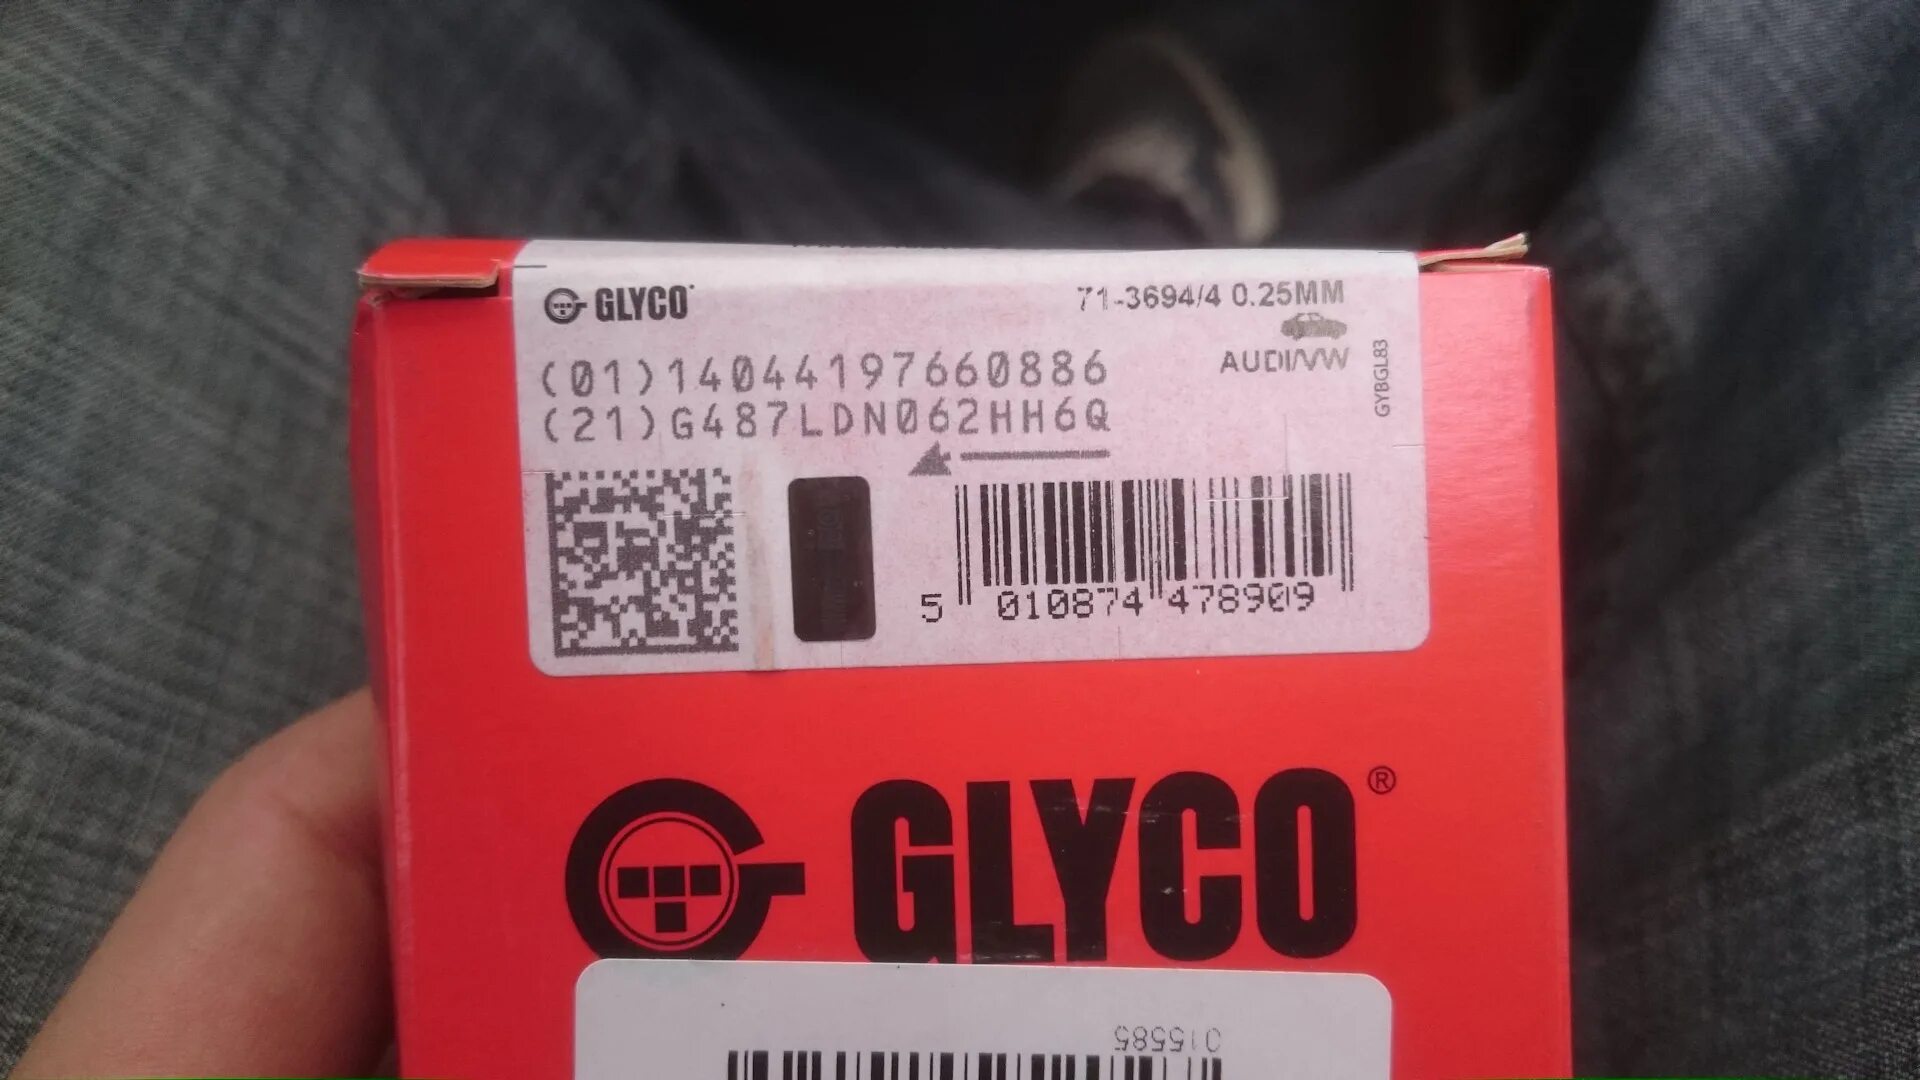 GLYCO 71-3694/4 STD. GLYCO номер: 71-3694/4 STD. 71-3694/4 0.25Mm. 71-4118/4 0.25Mm.